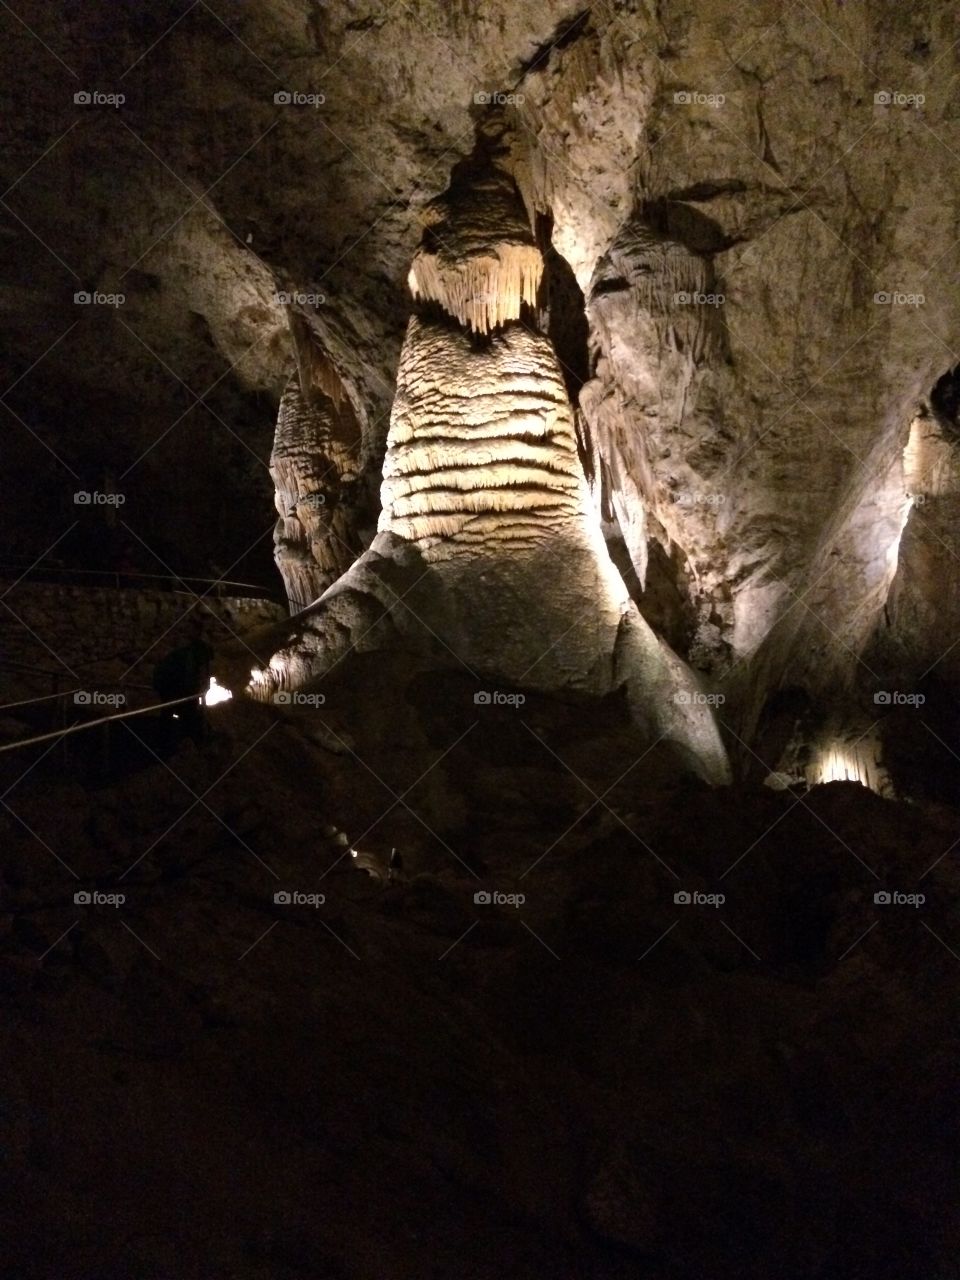 Walrus formation, Carlsbad caverns